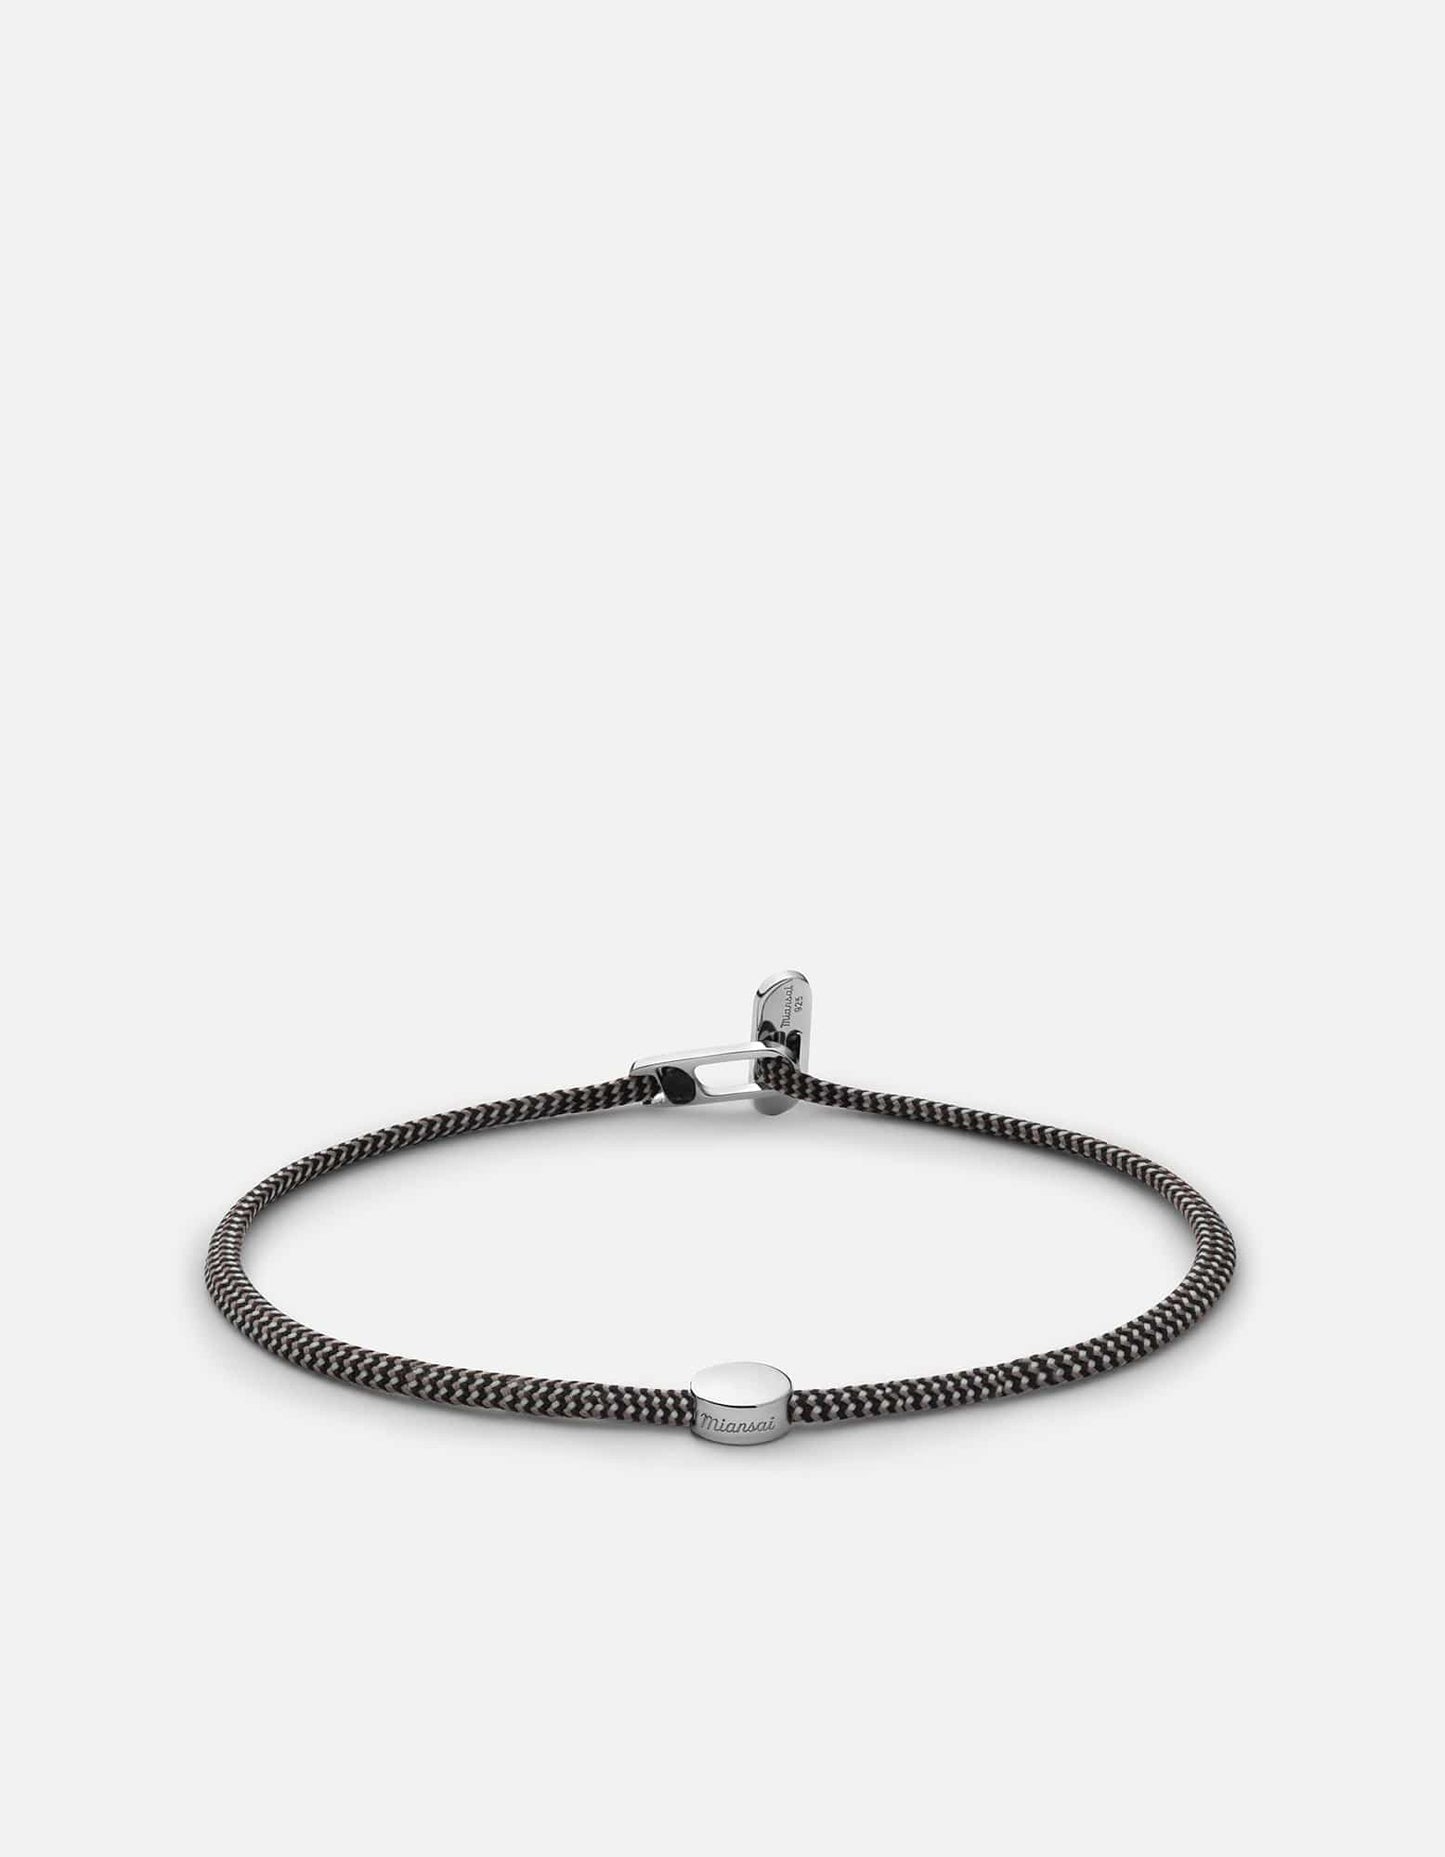 Type Metric 2.5mm Rope Bracelet, Sterling Silver/Black/Gray